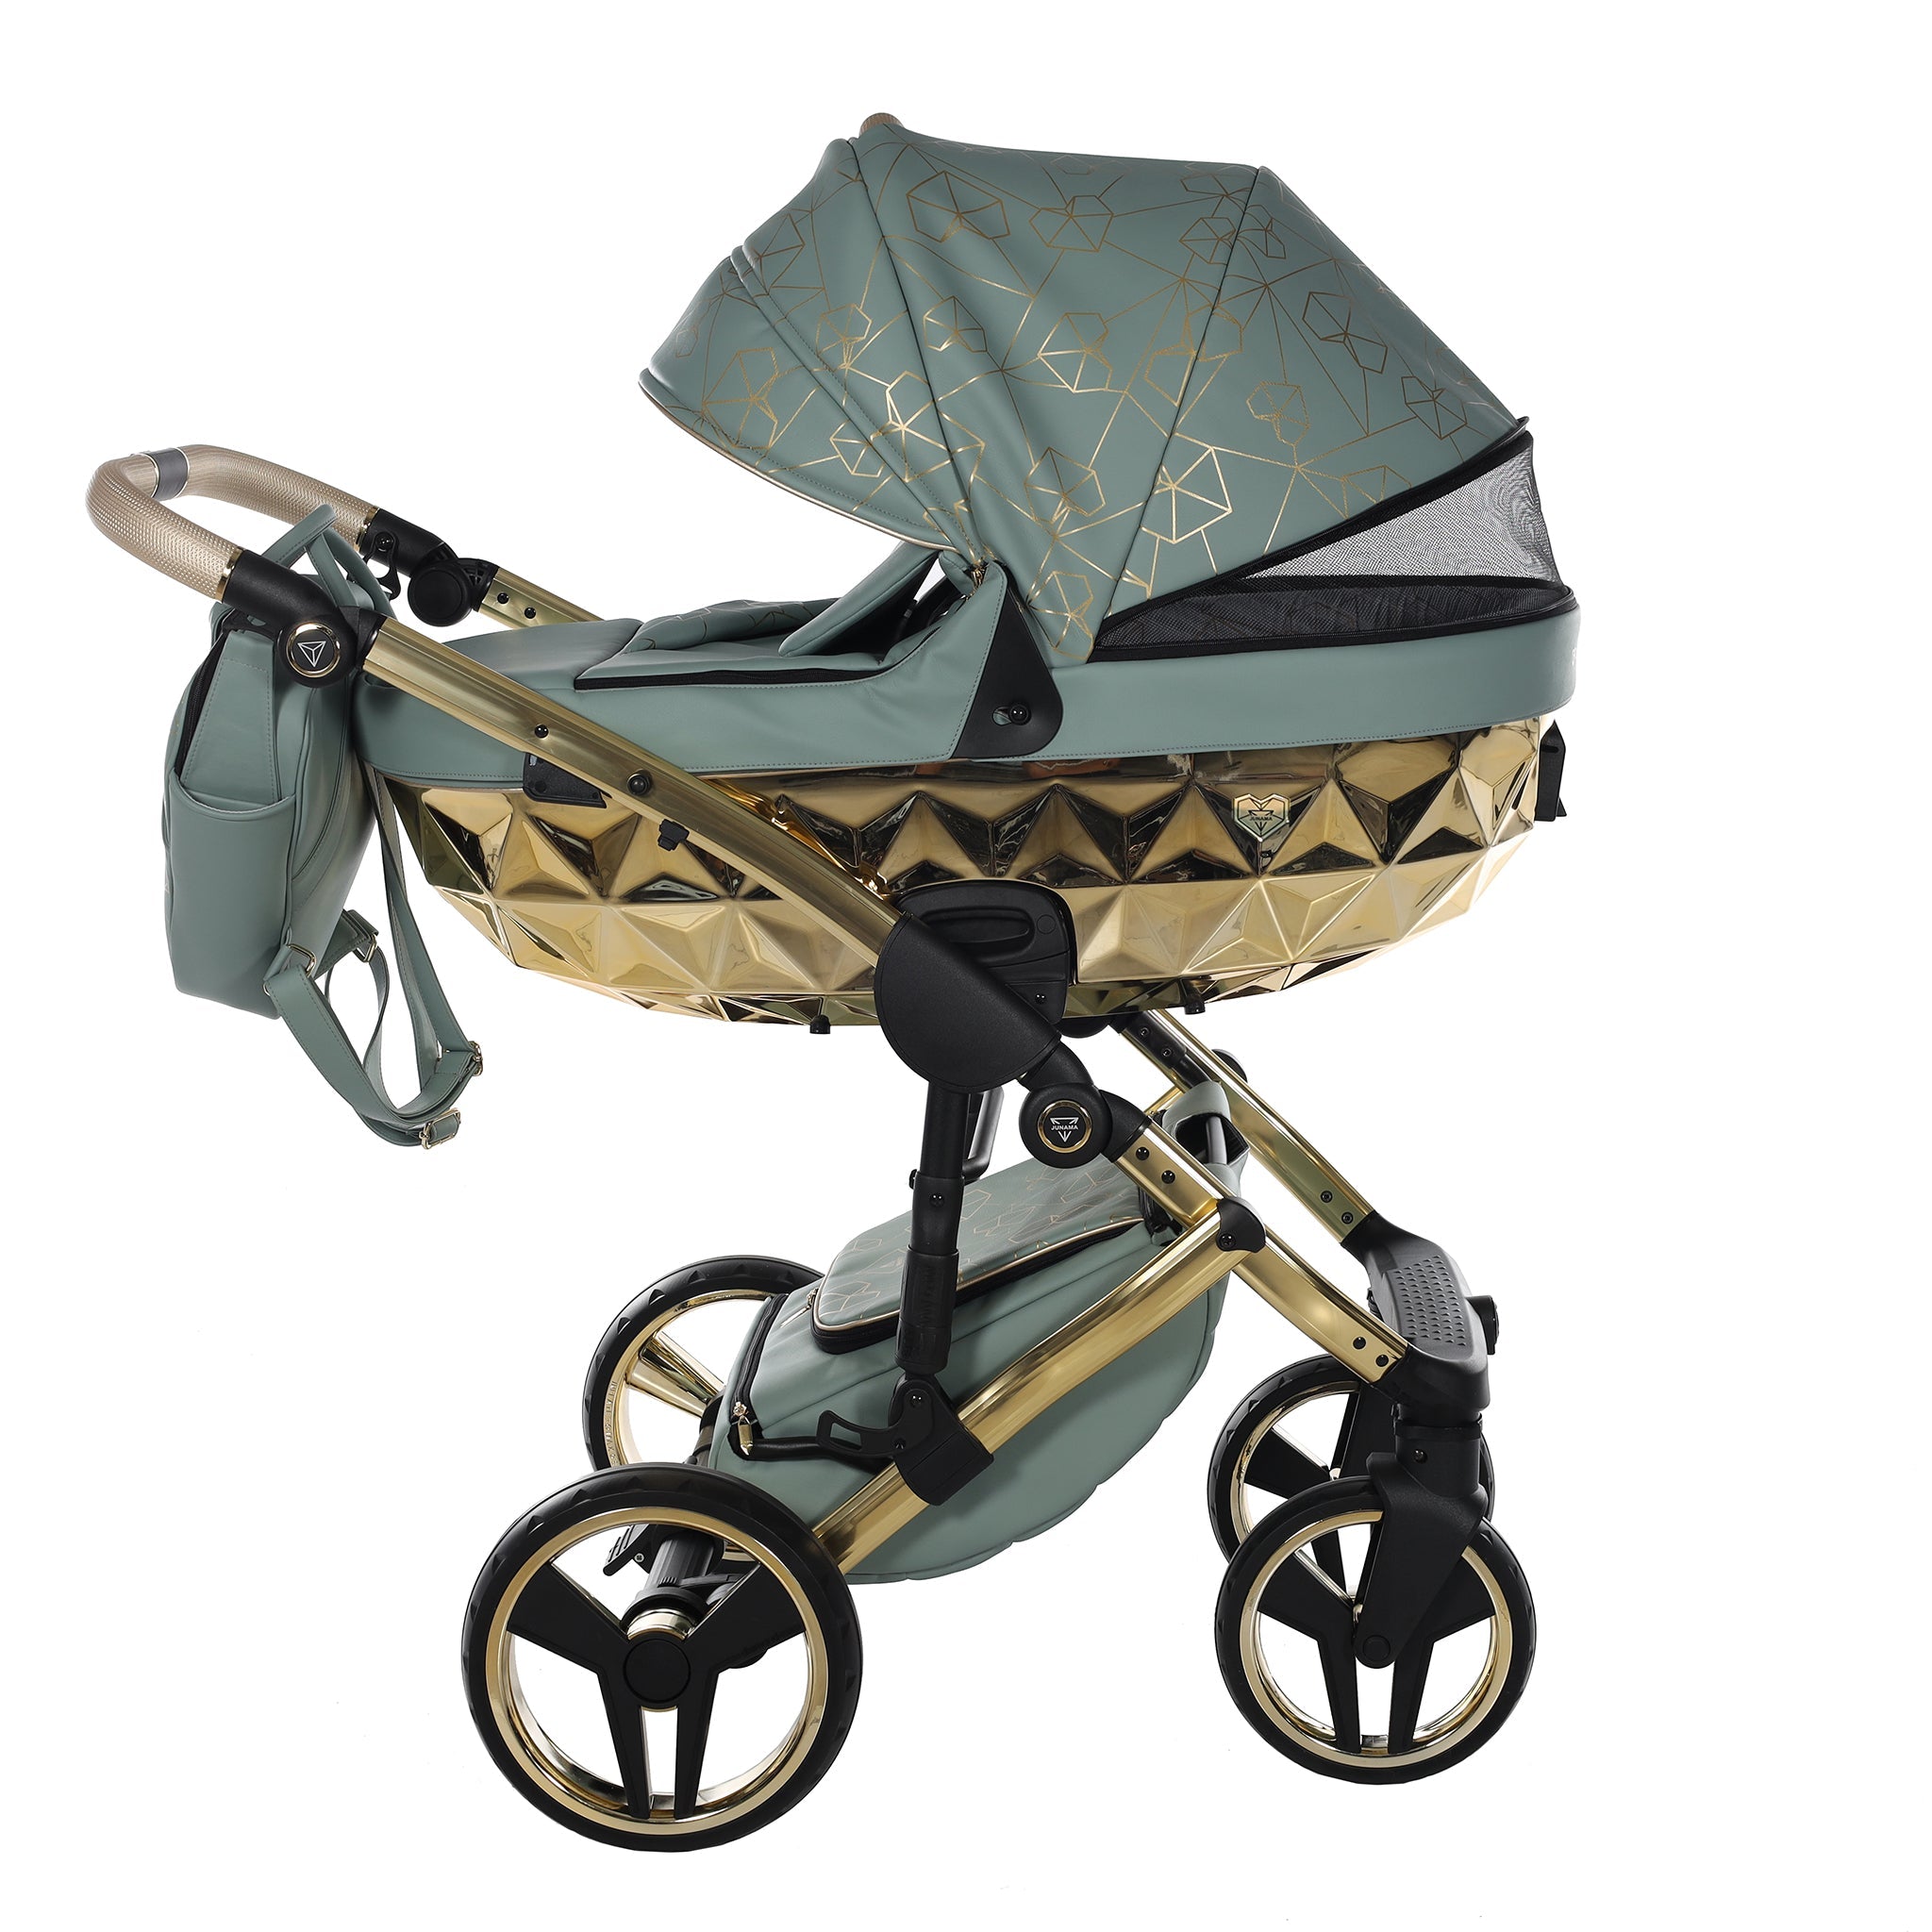 Junama Heart, baby prams or stroller 2 in 1 - Green and Gold, Code number: JUNHERT03